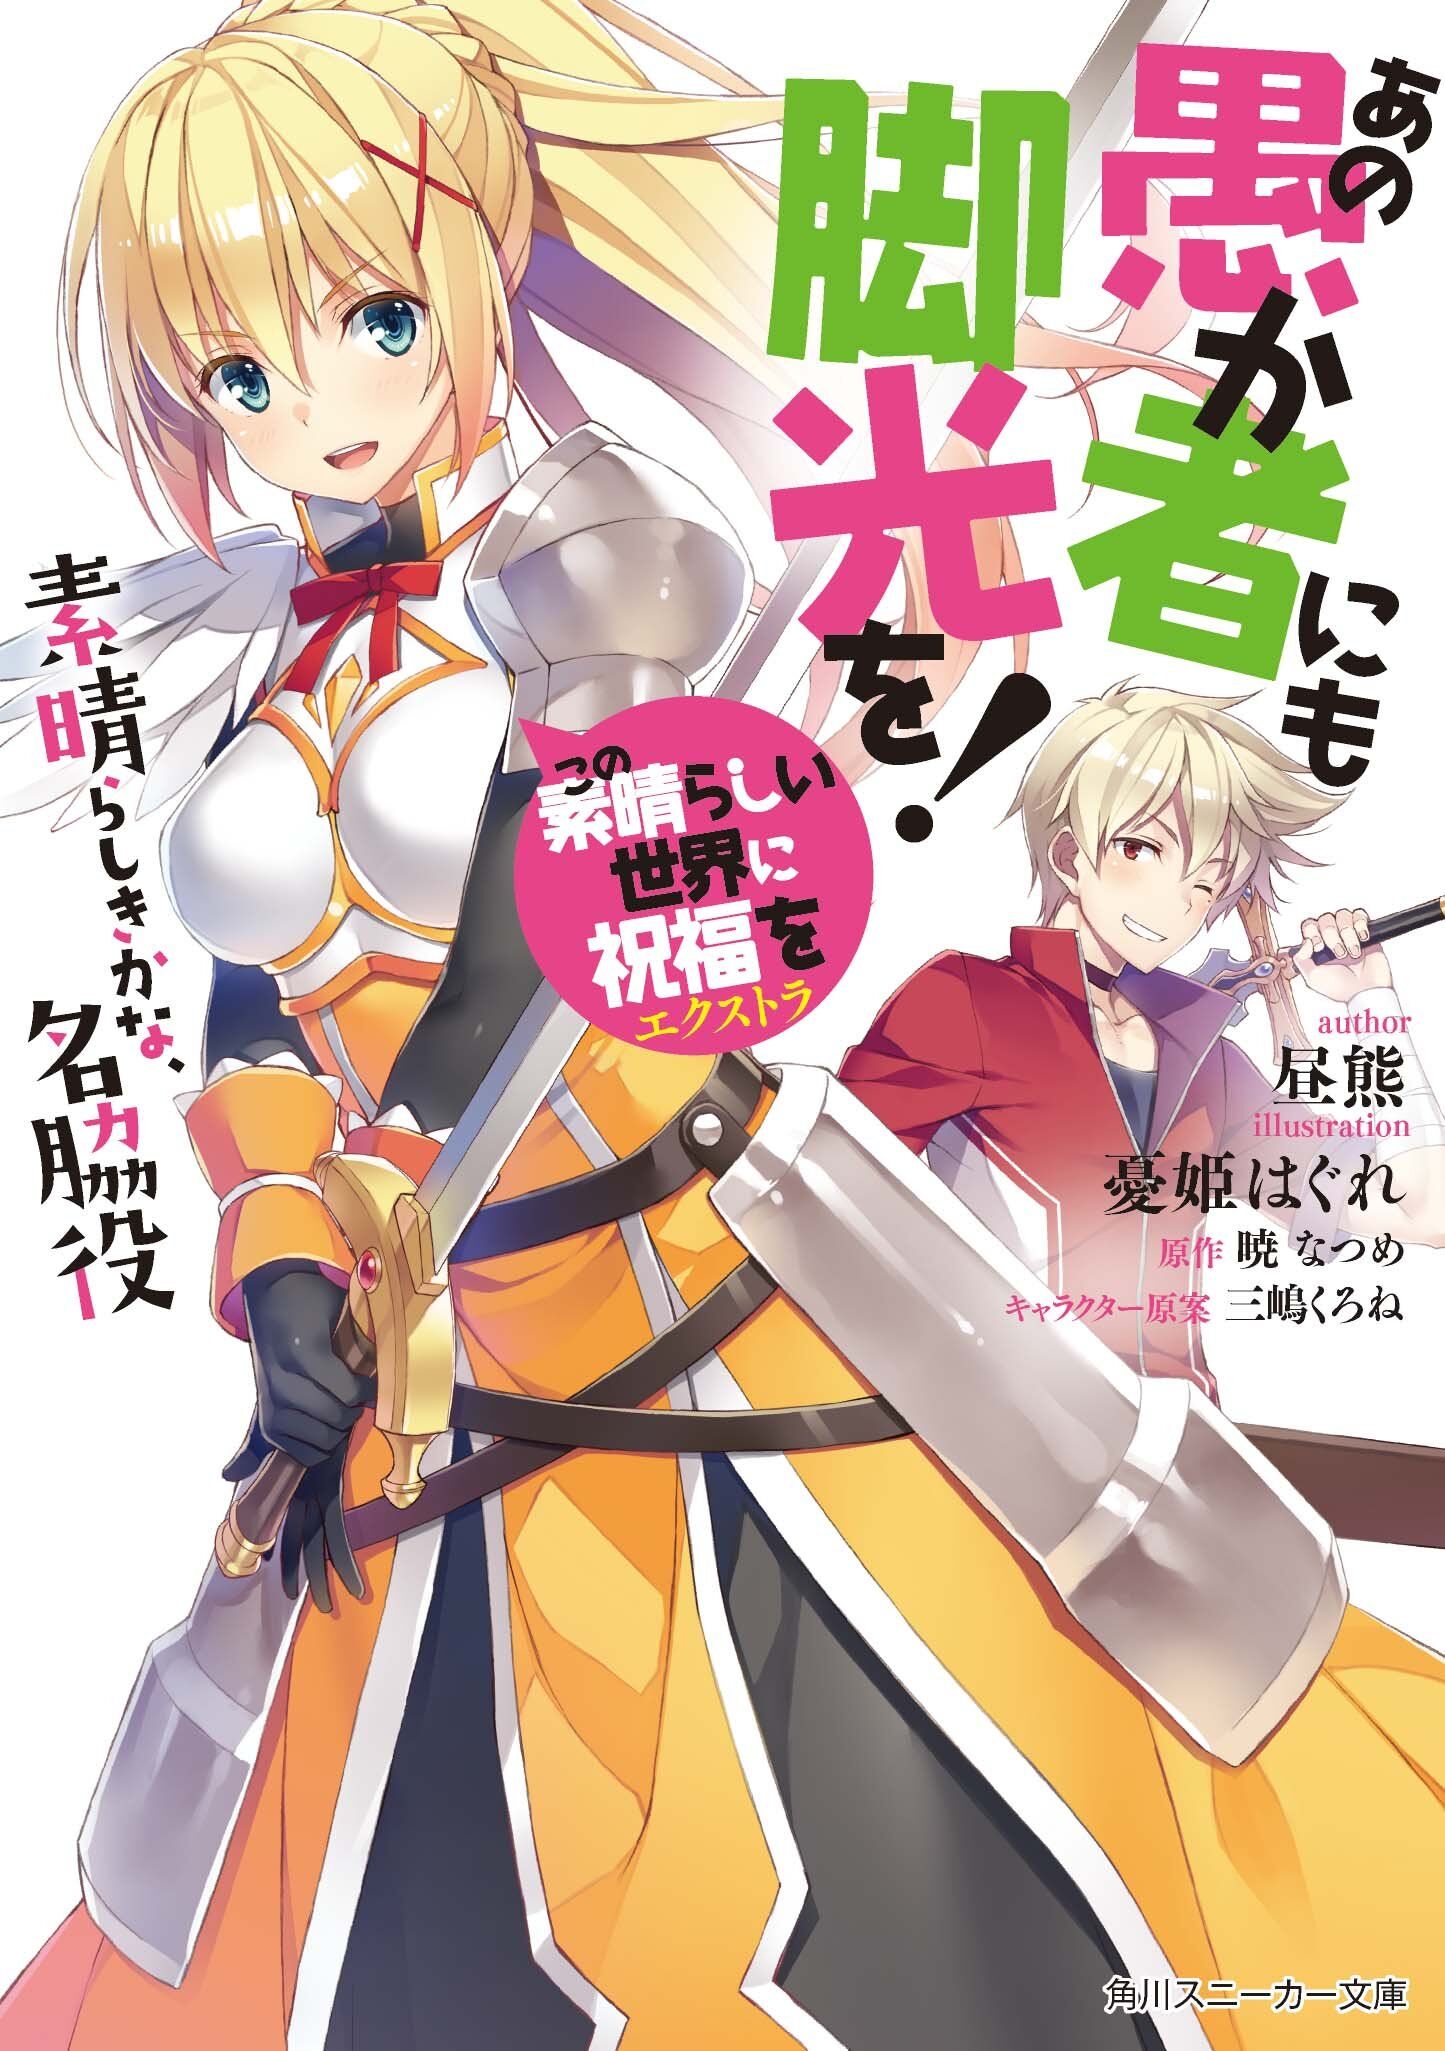 New Kono Subarashii Sekai ni Shukufuku wo! Anime Announced - Otaku Tale